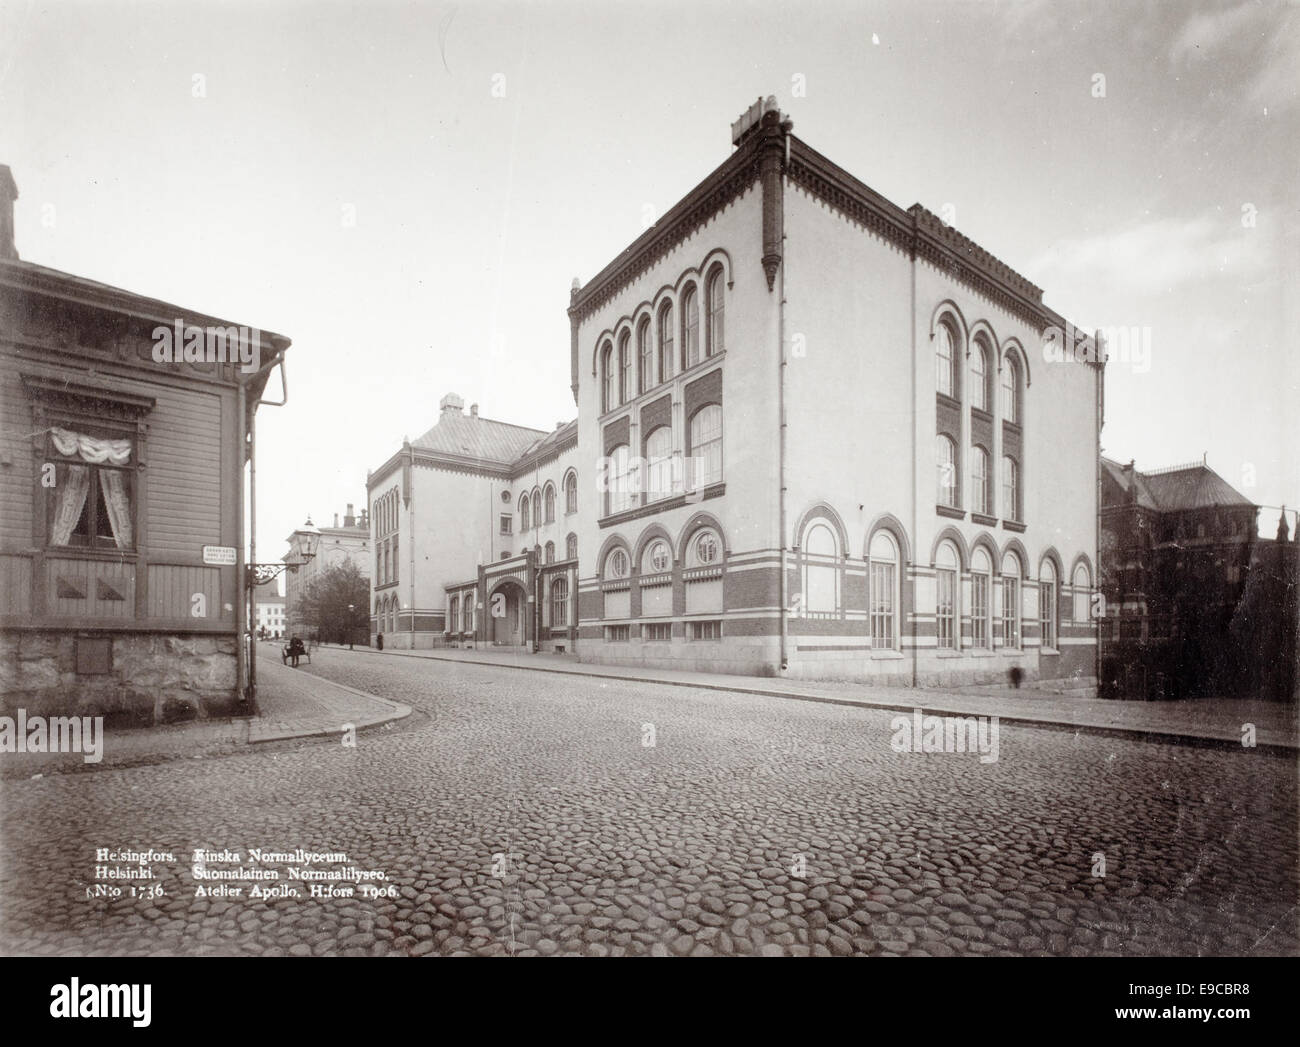 Suomalainen Normaalilyseo (gymnasium), Helsinki, 1906 Banque D'Images